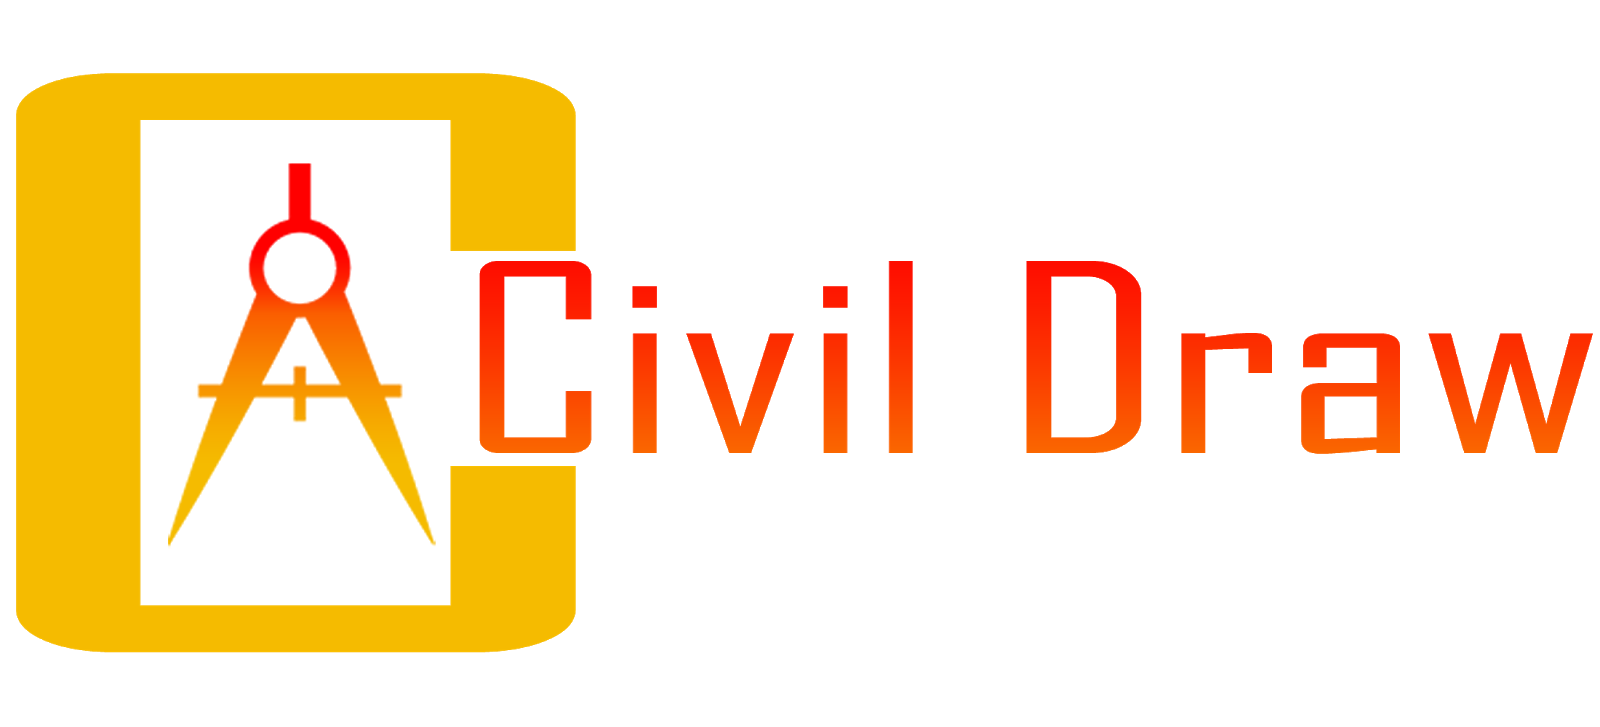 Civil Draw